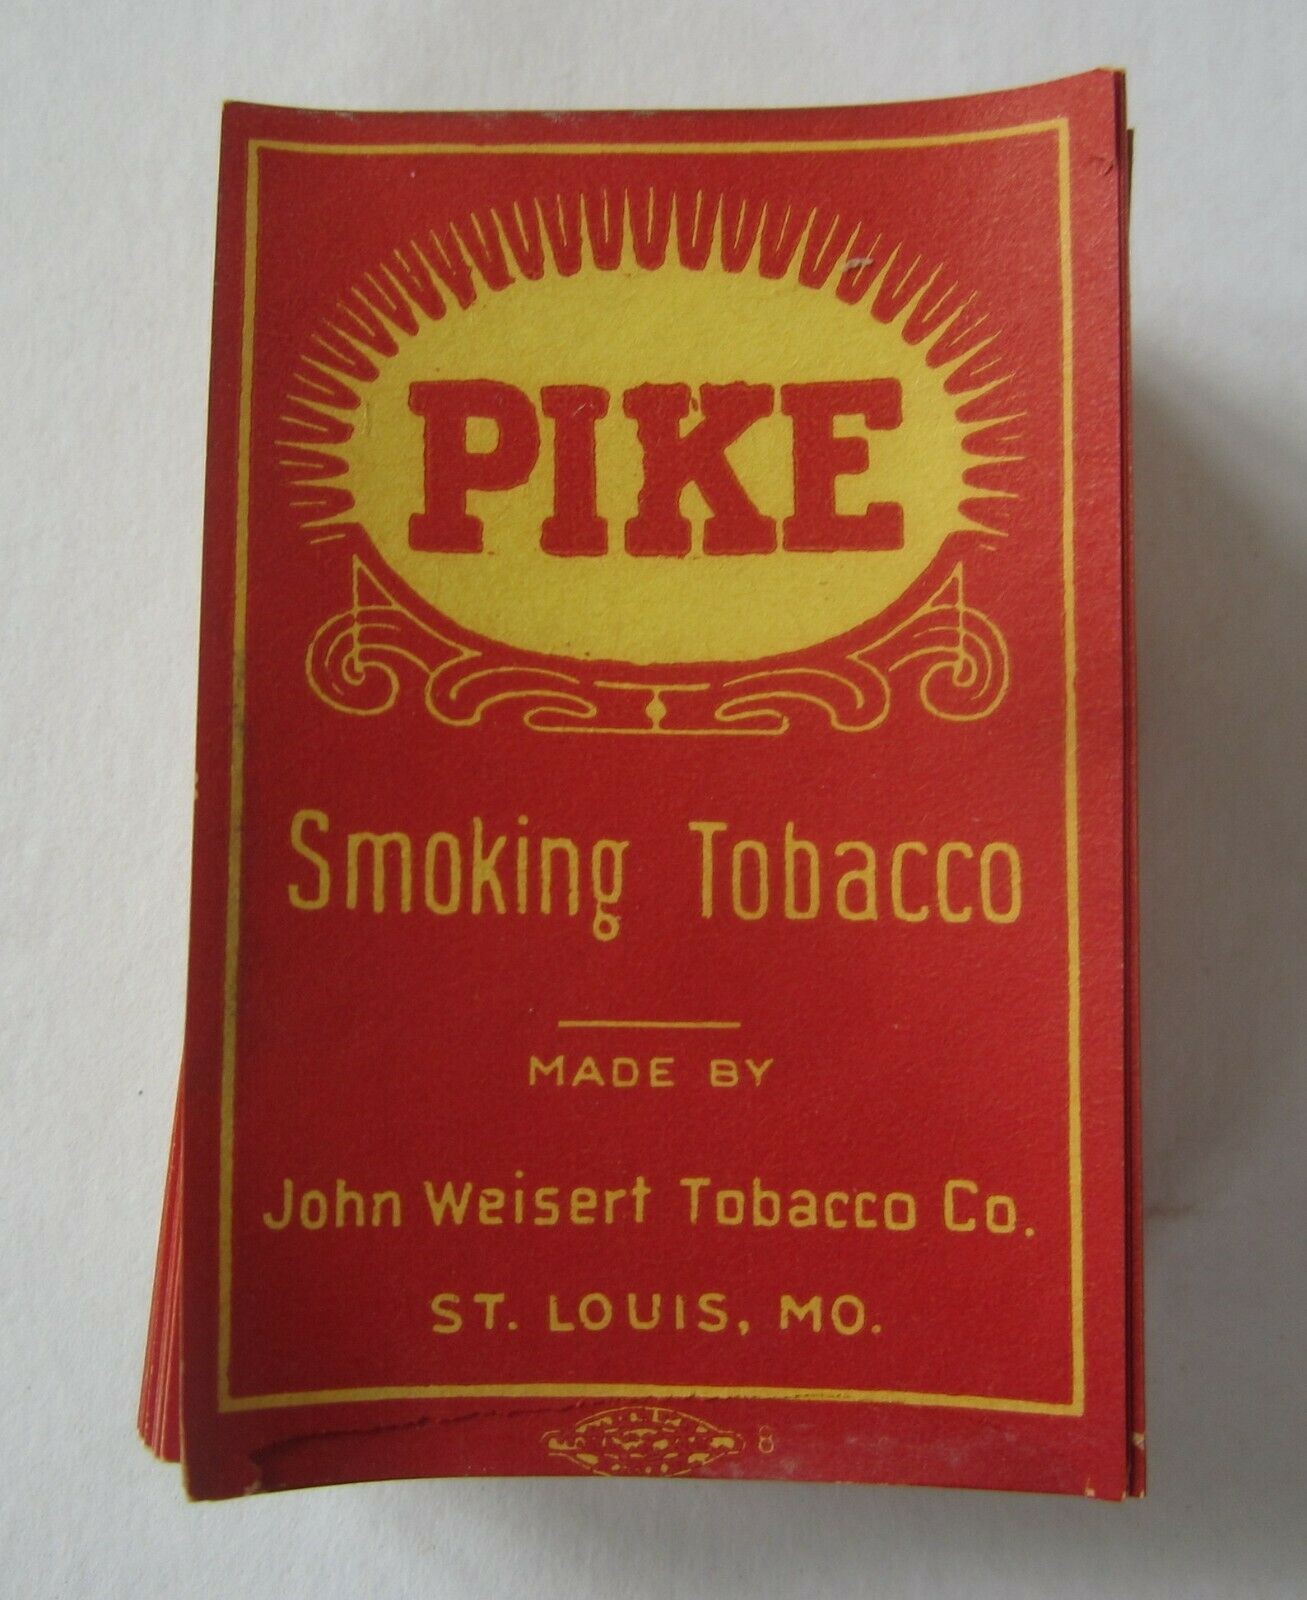  Lot of 100 Old Vintage - PIKE Smoking Tobacco ...